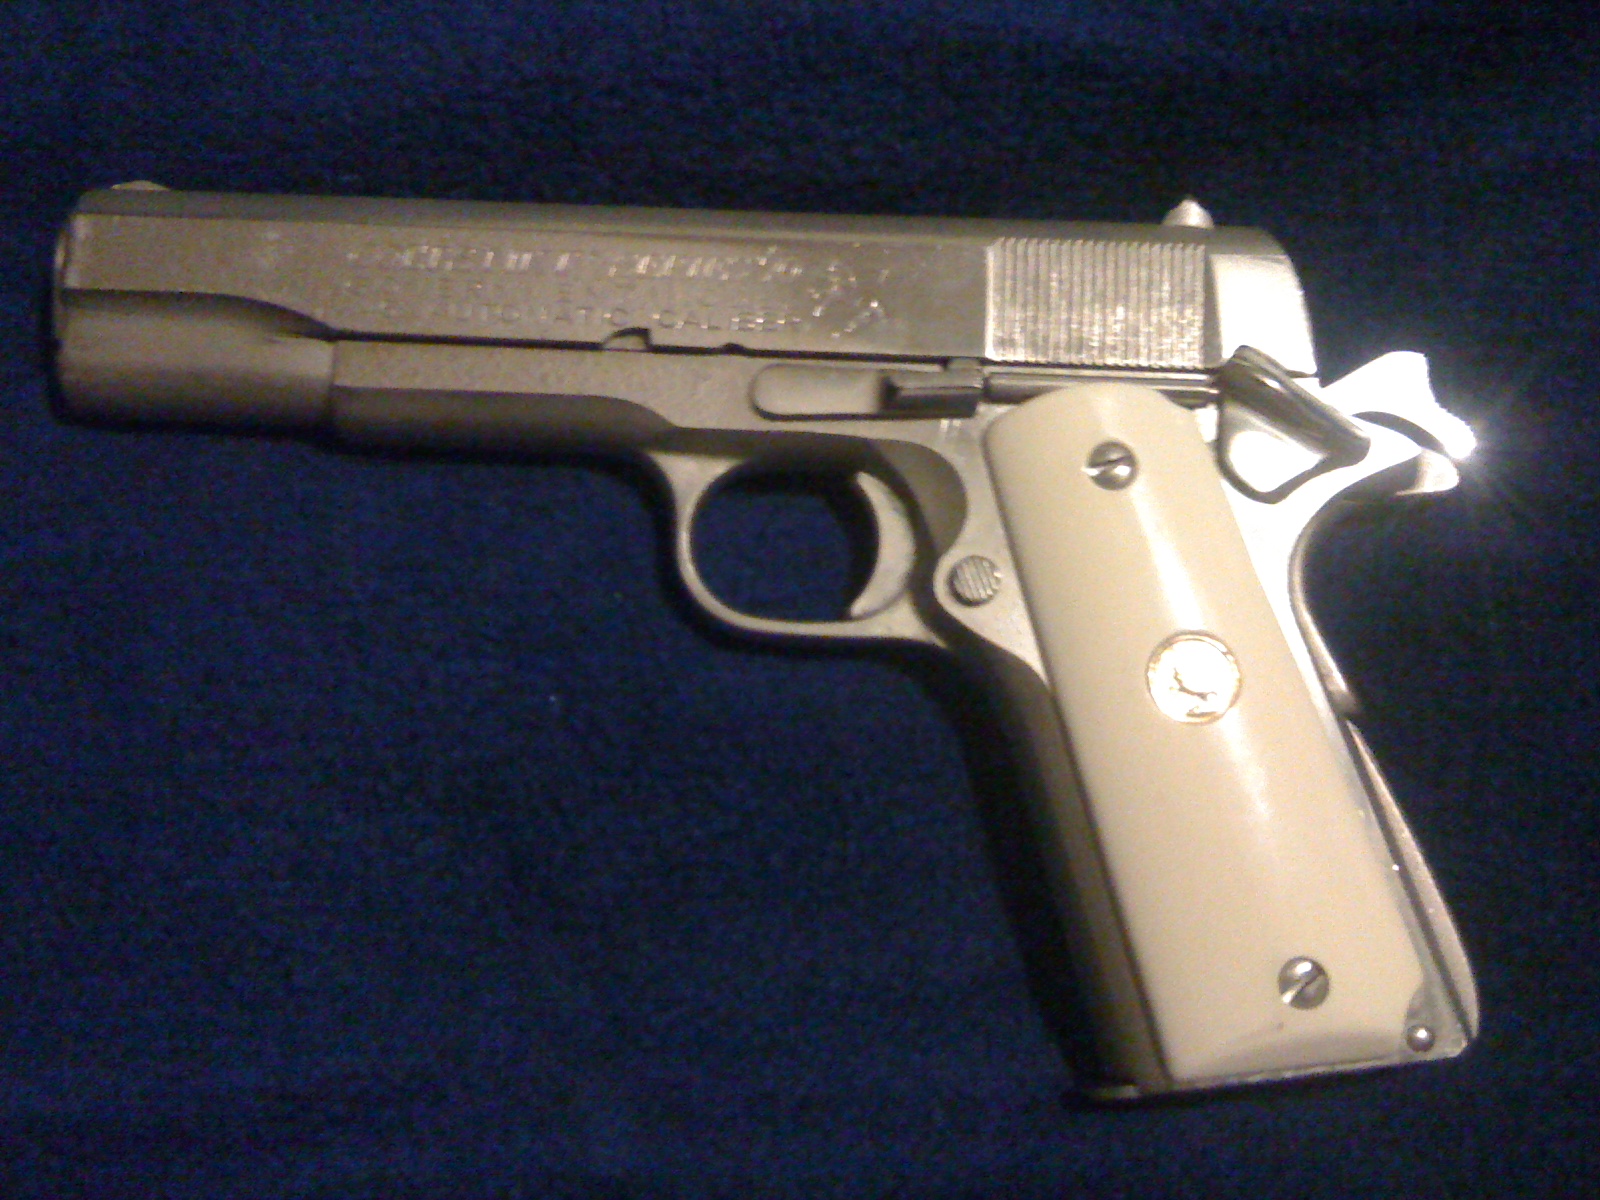 Colt1911 Mark IV series 70